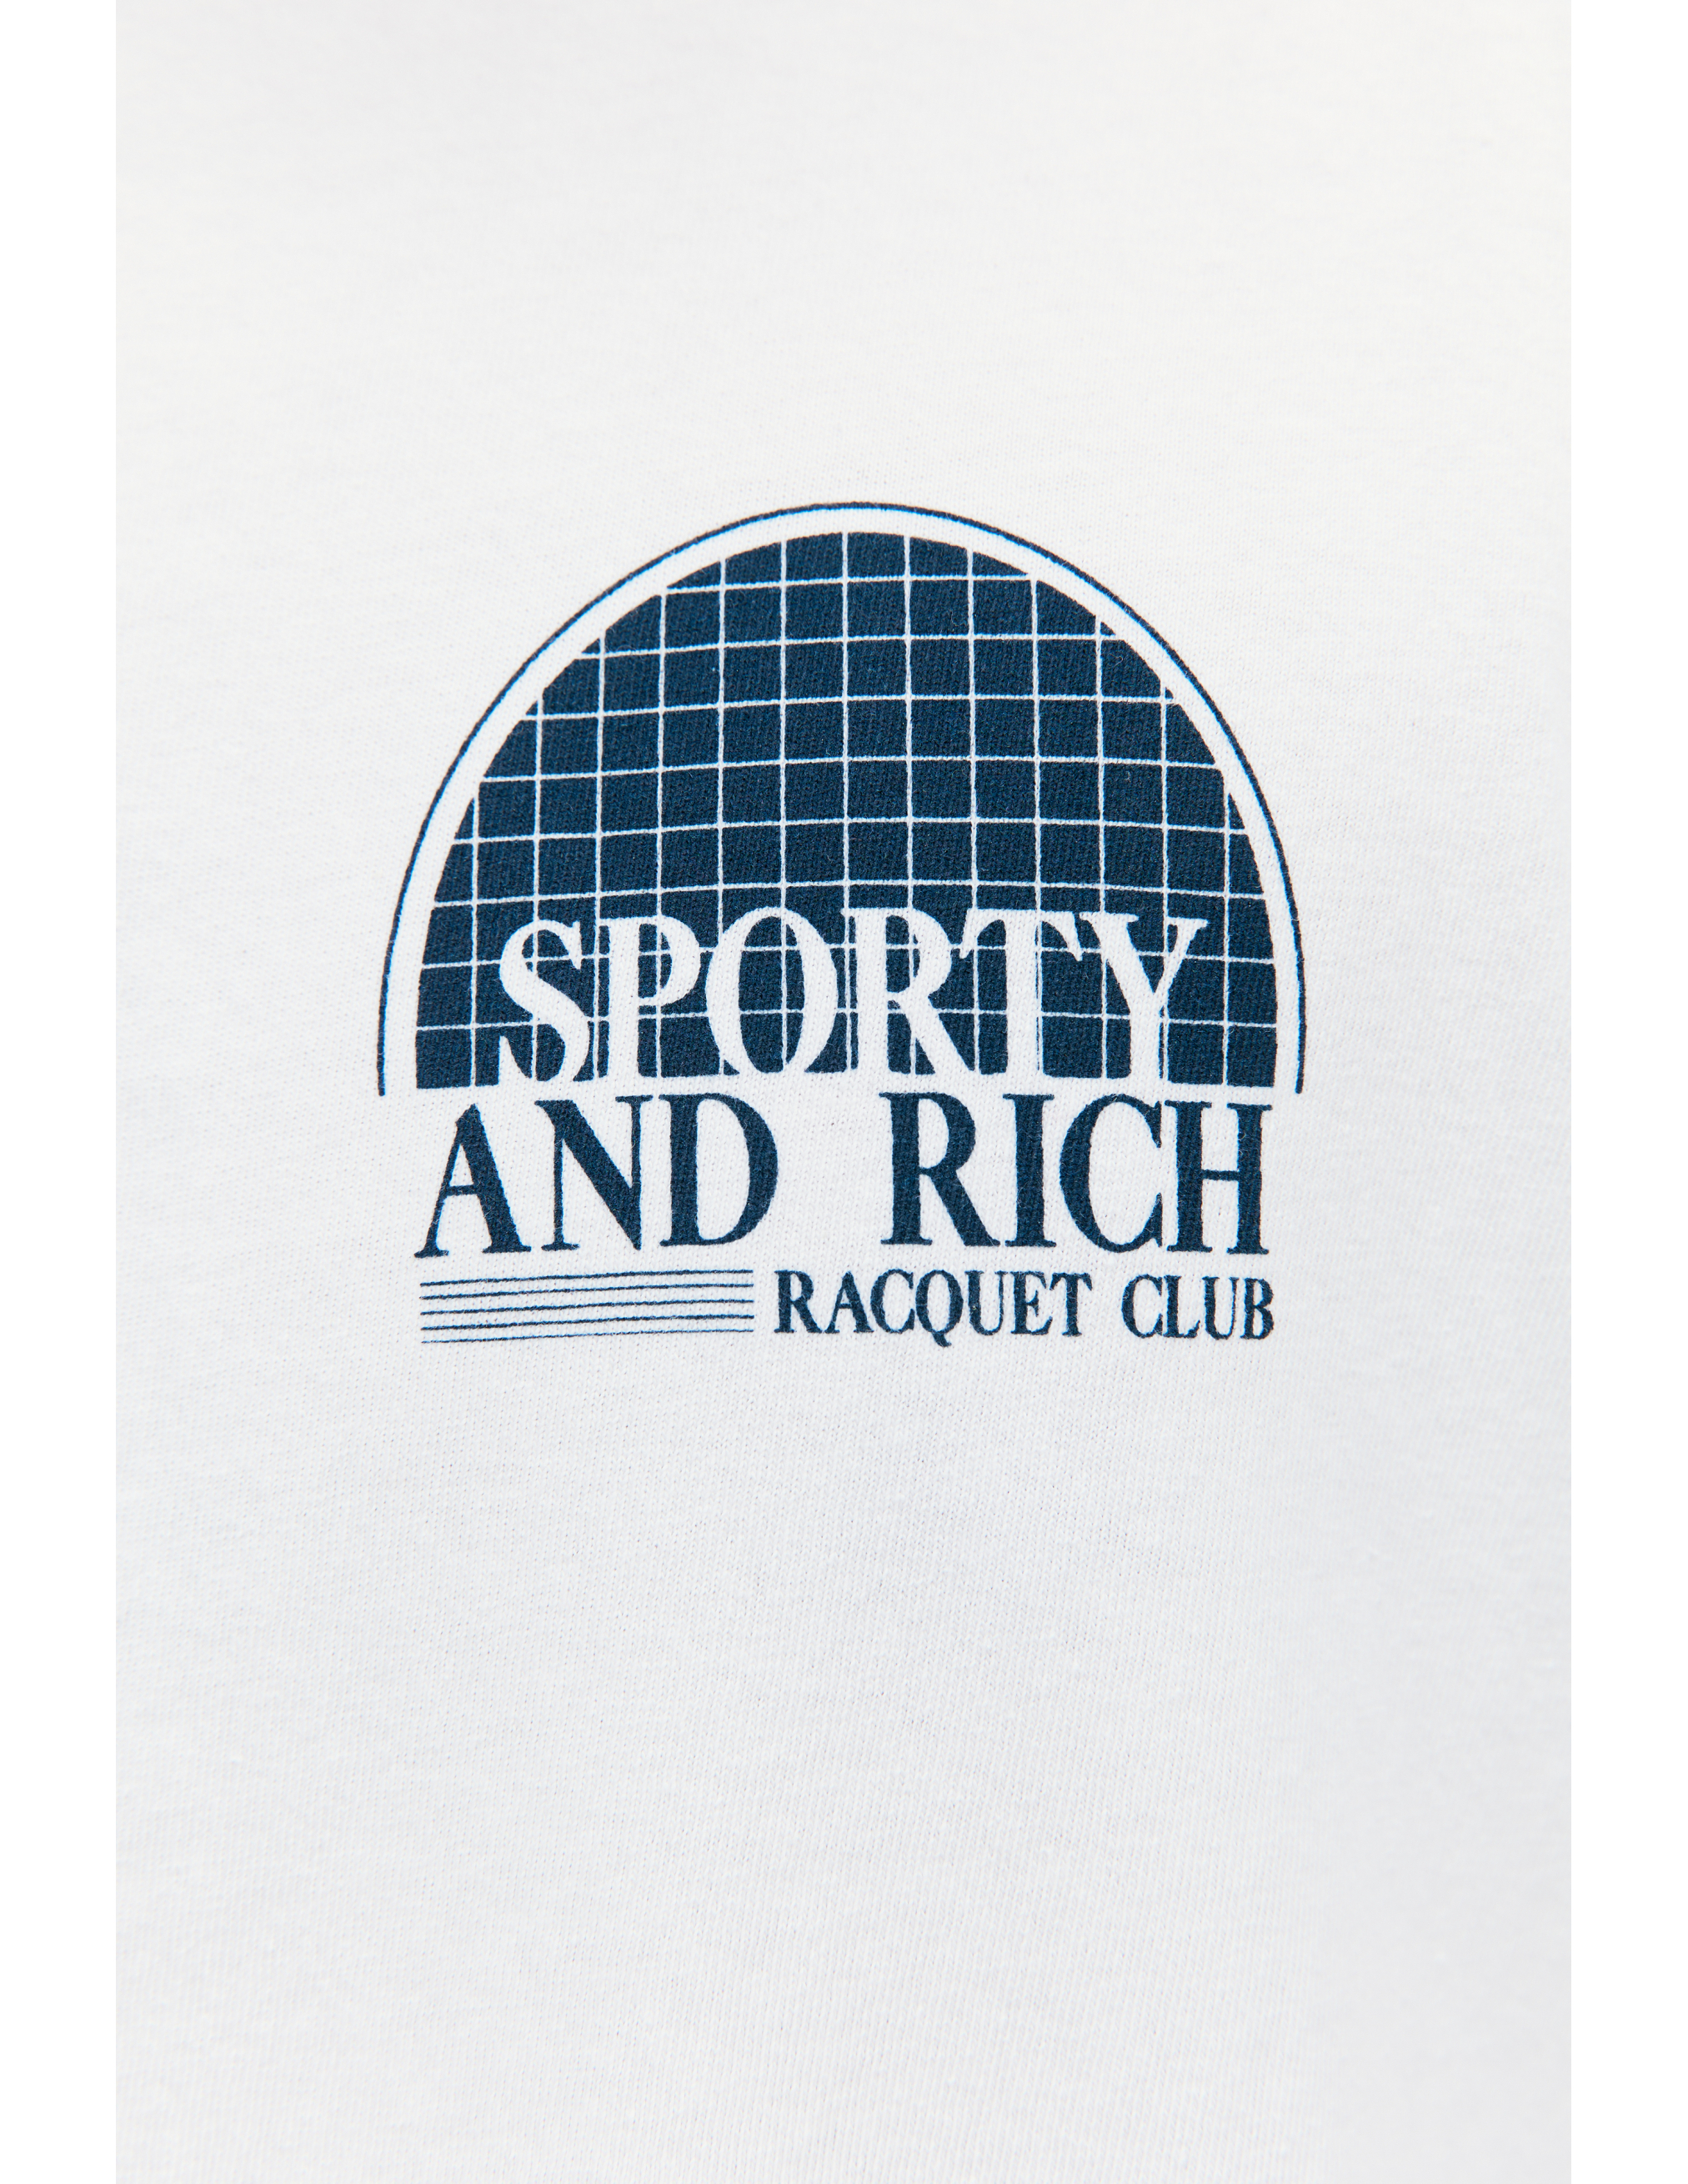 Футболка с принтом Racquet club SPORTY & RICH TS923WH, размер M;L;XL - фото 4